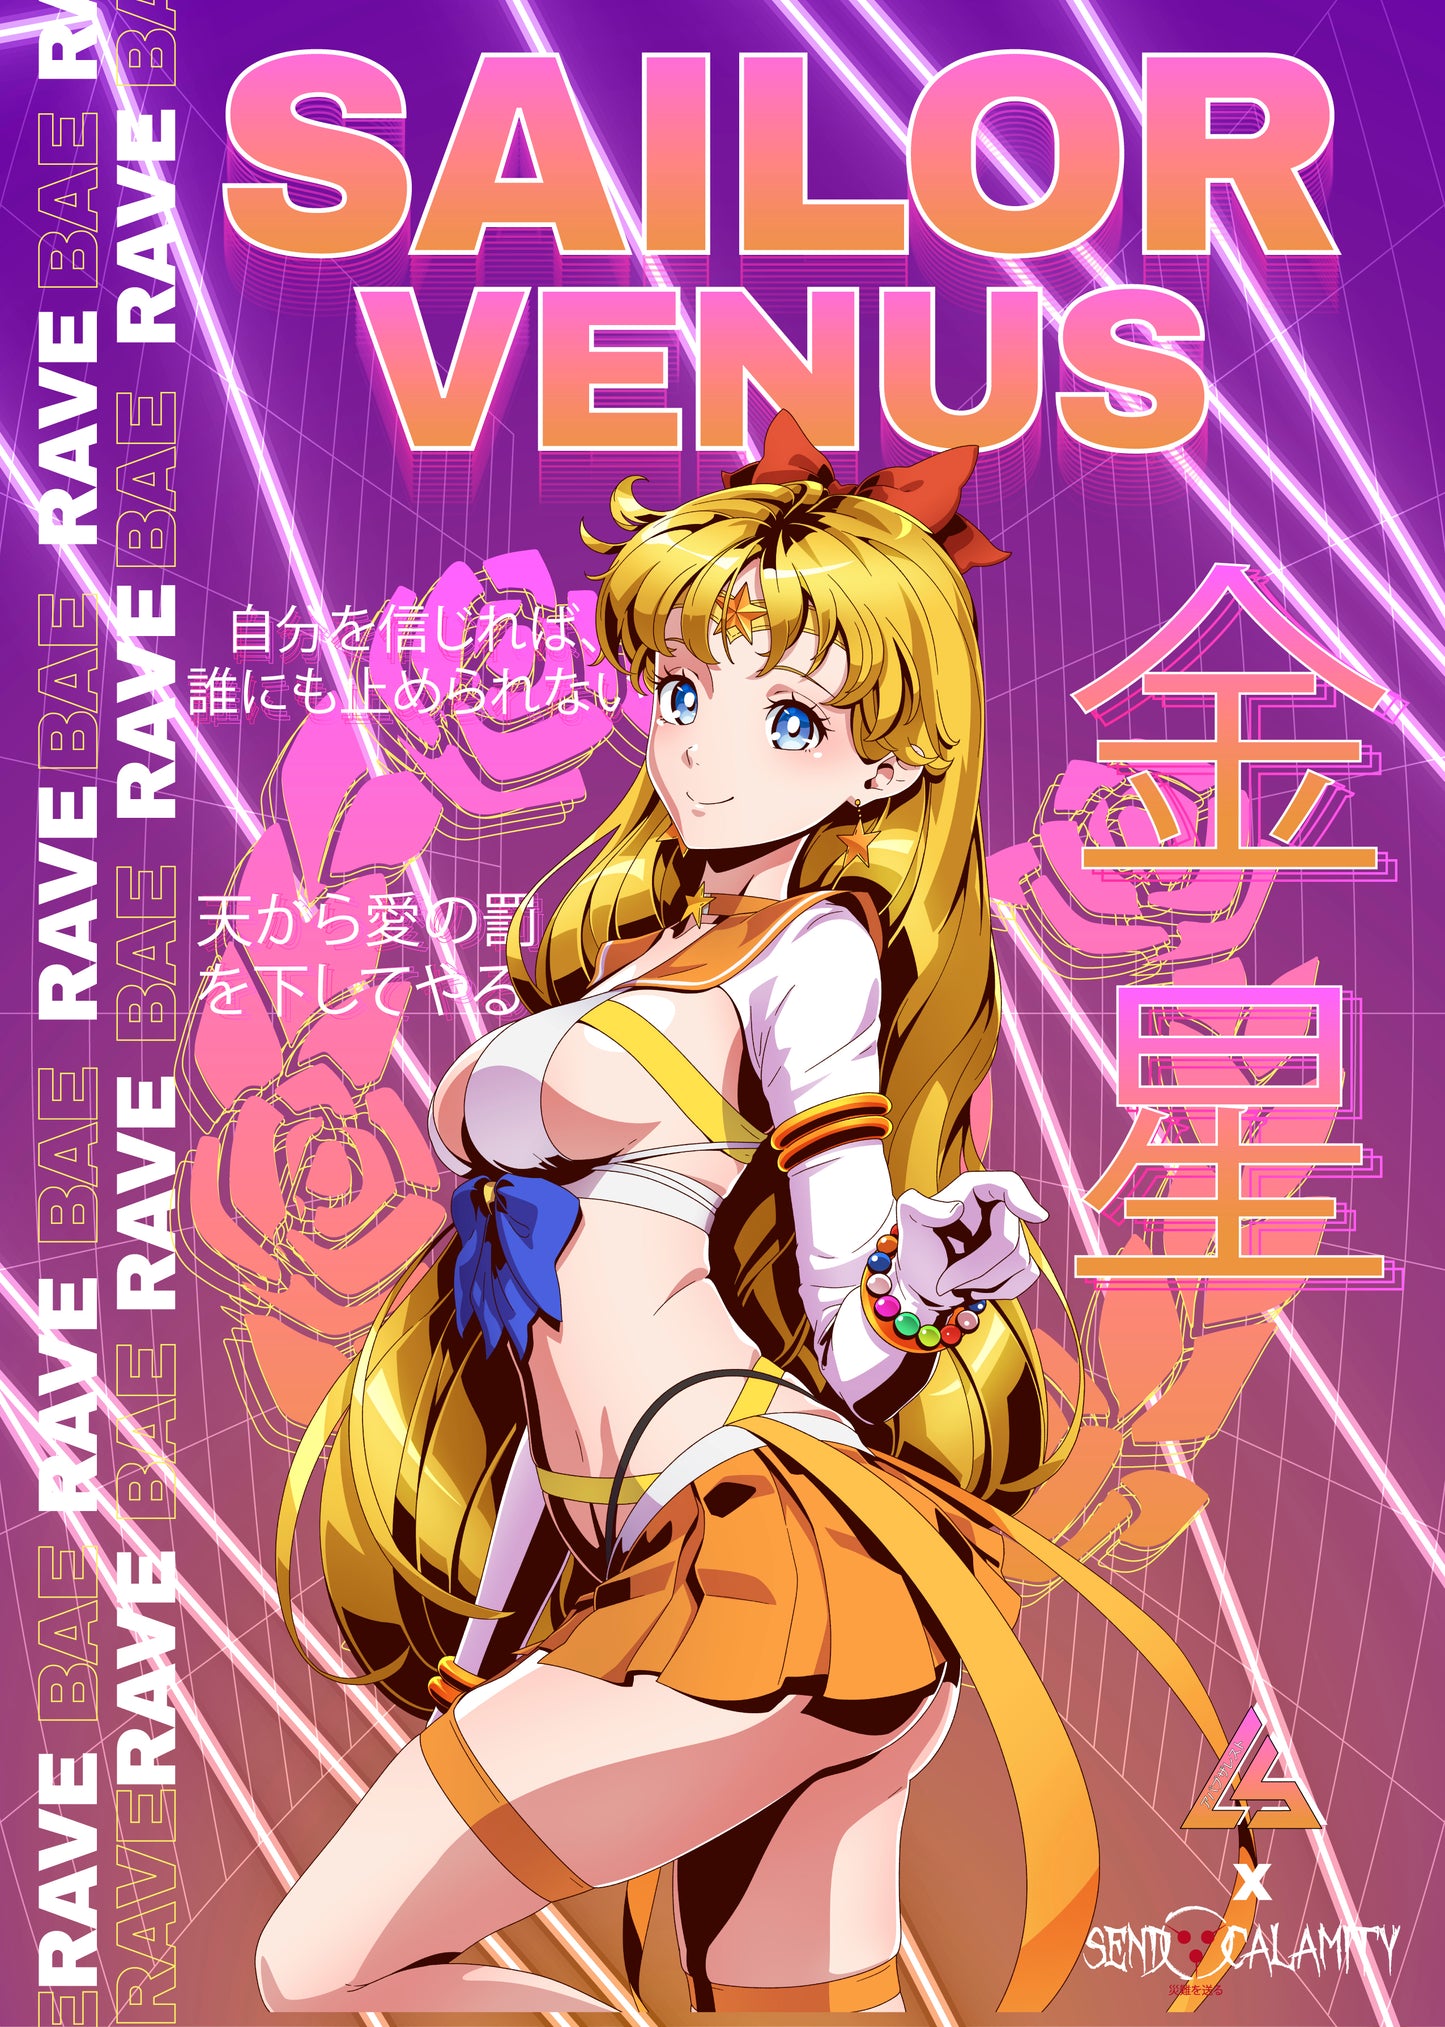 Rave Bae Sailor Venus Apparel